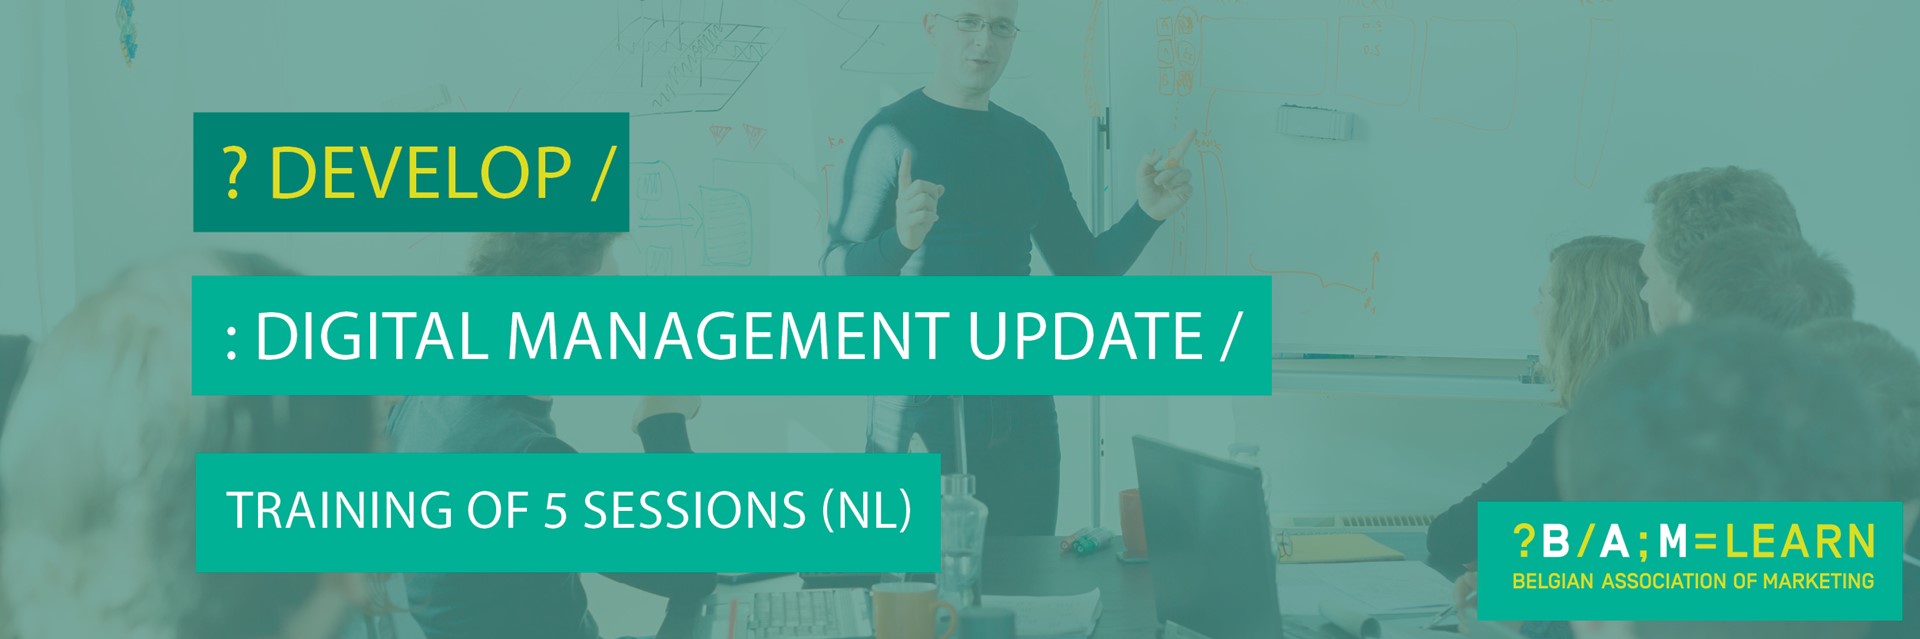 digital management update